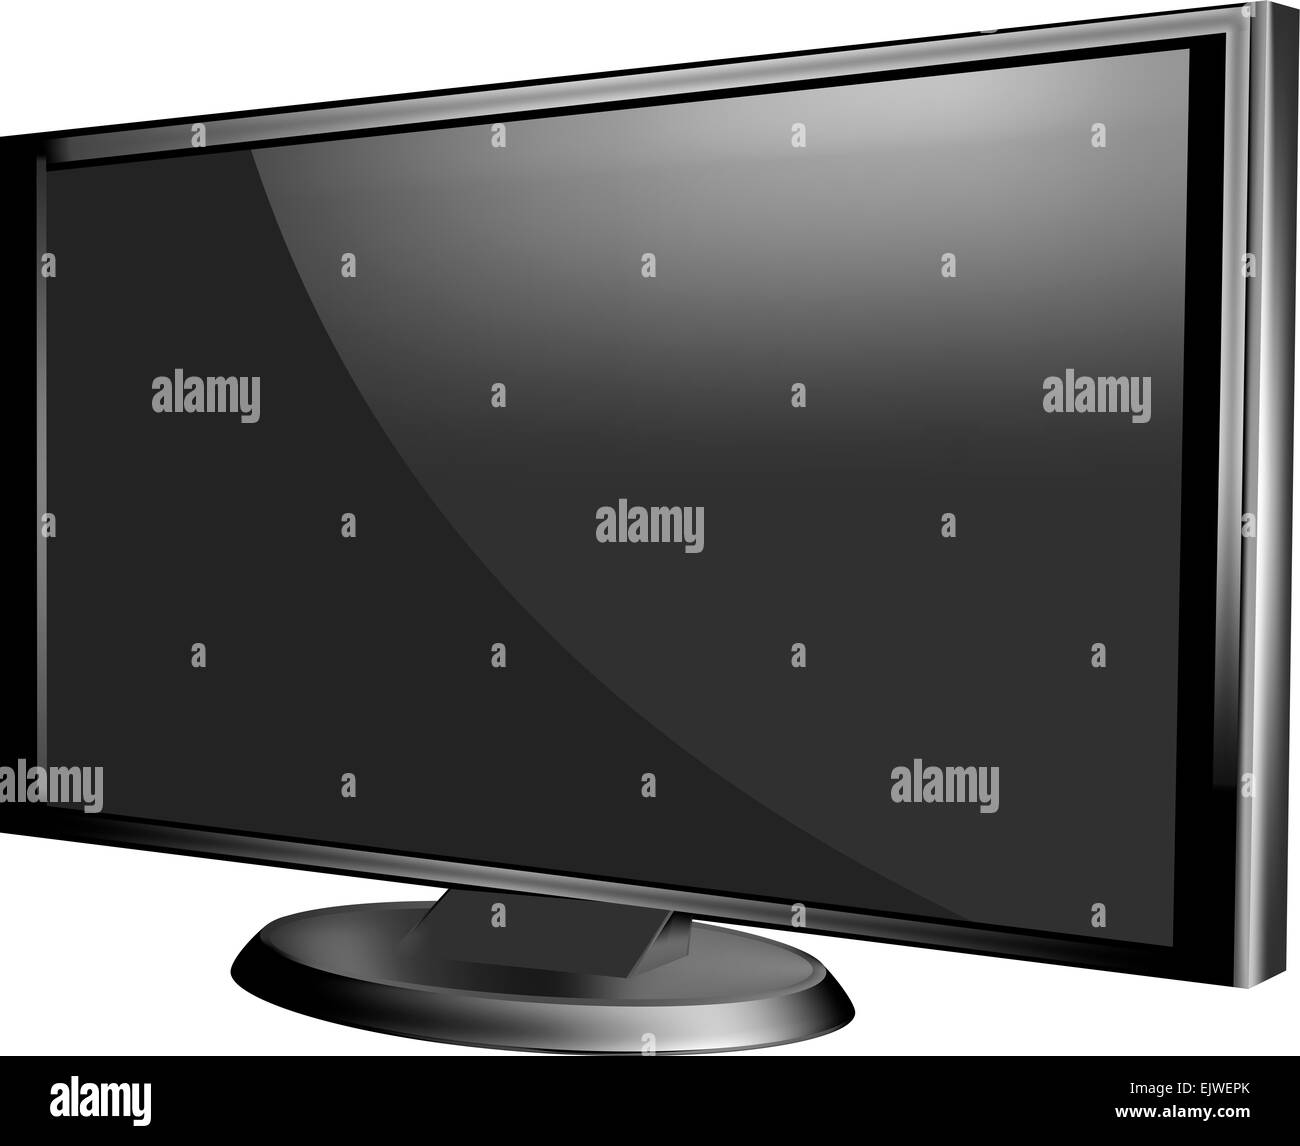 TV flat screen lcd, plasma realistic illustration Stock Photo